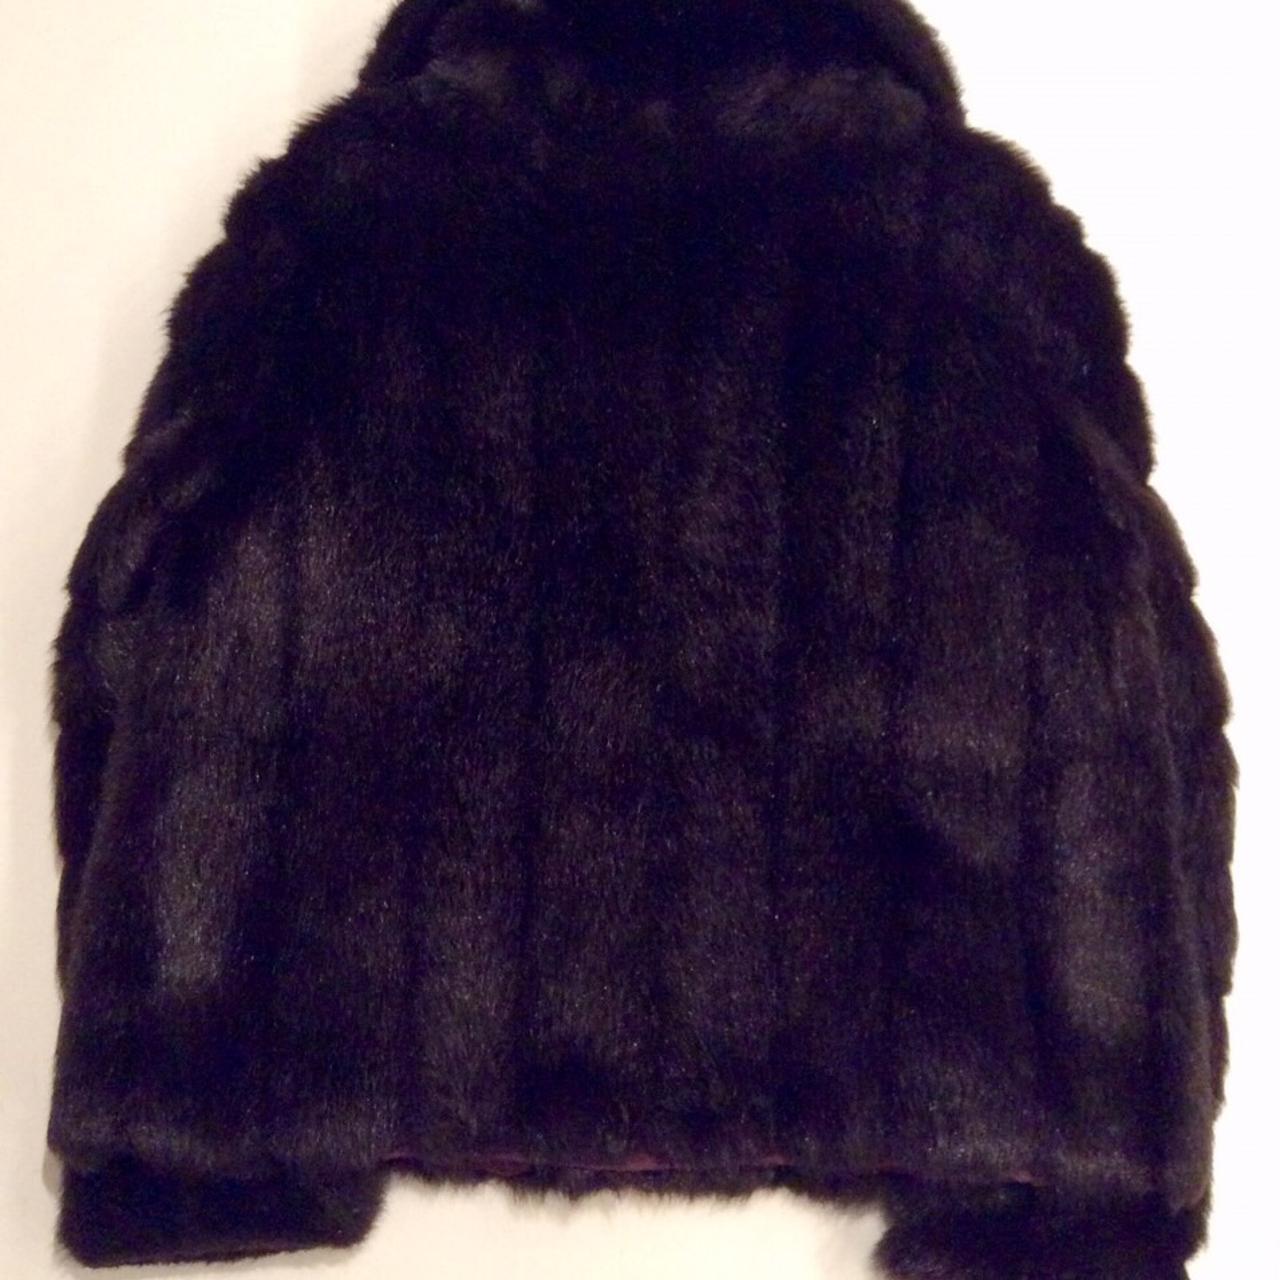 MCM Munich Black Denim Jacket with Fur from MCM - Depop